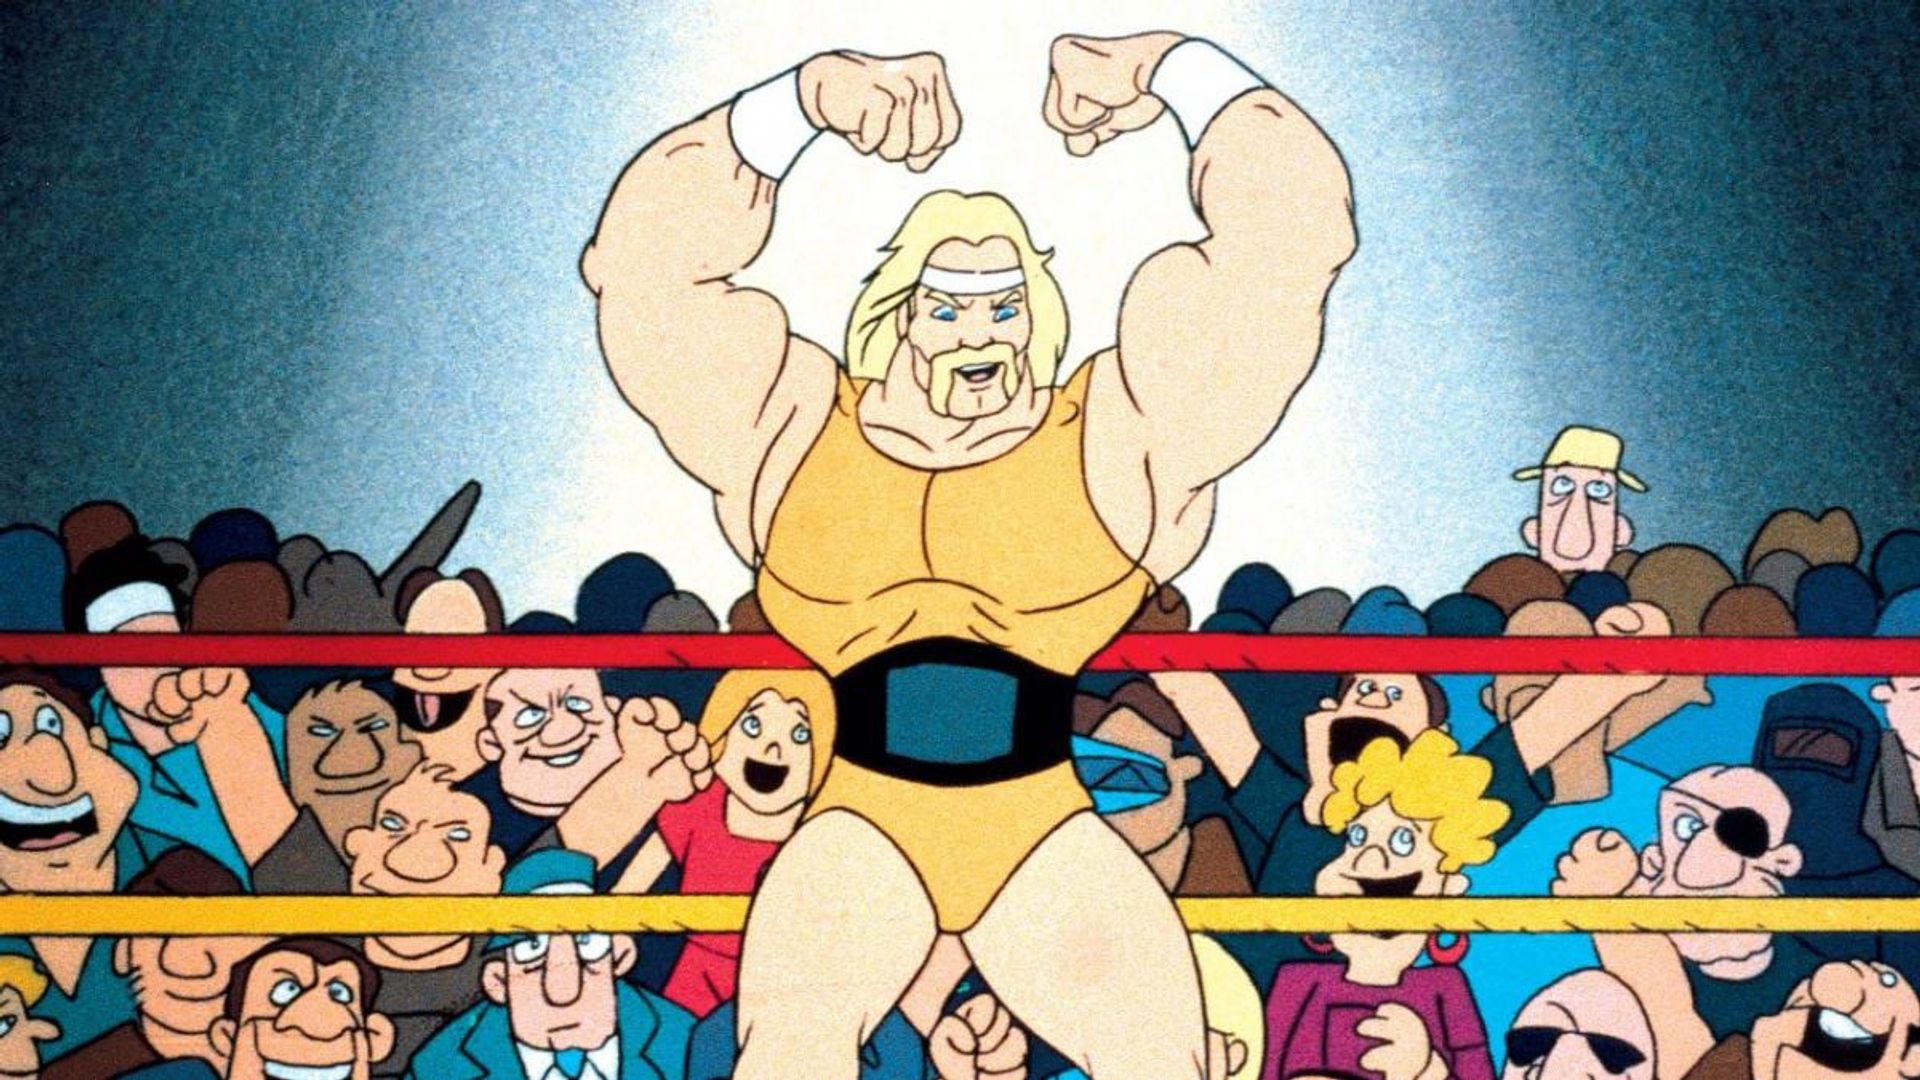 A scene from 'Hulk Hogan's Rock 'n' Wrestling' animated series